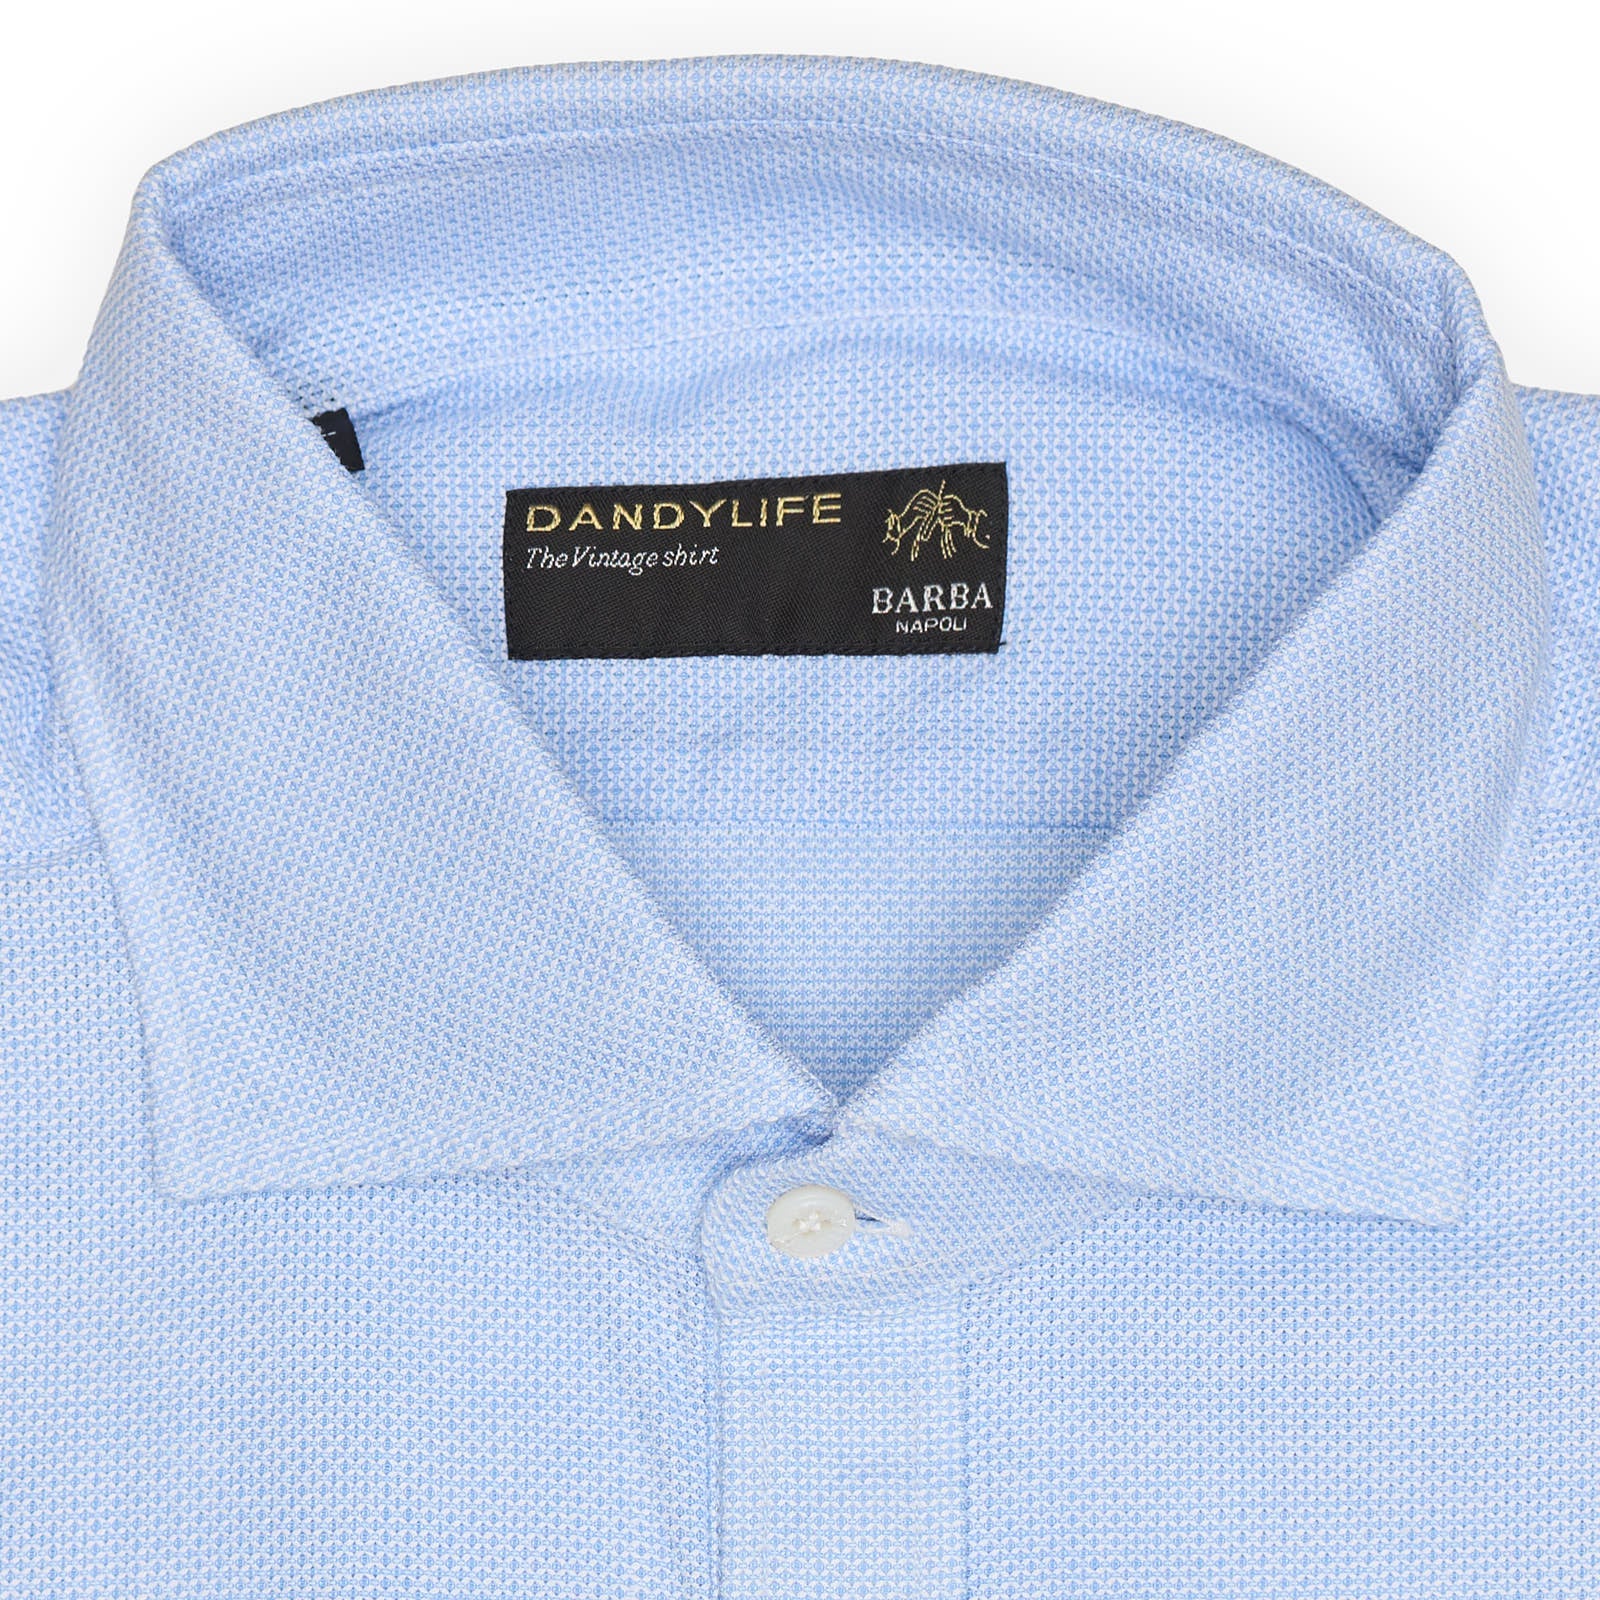 BARBA Napoli for Dandylife "Vintage" Blue Oxford Cotton Dress Shirt EU 43 NEW US 17